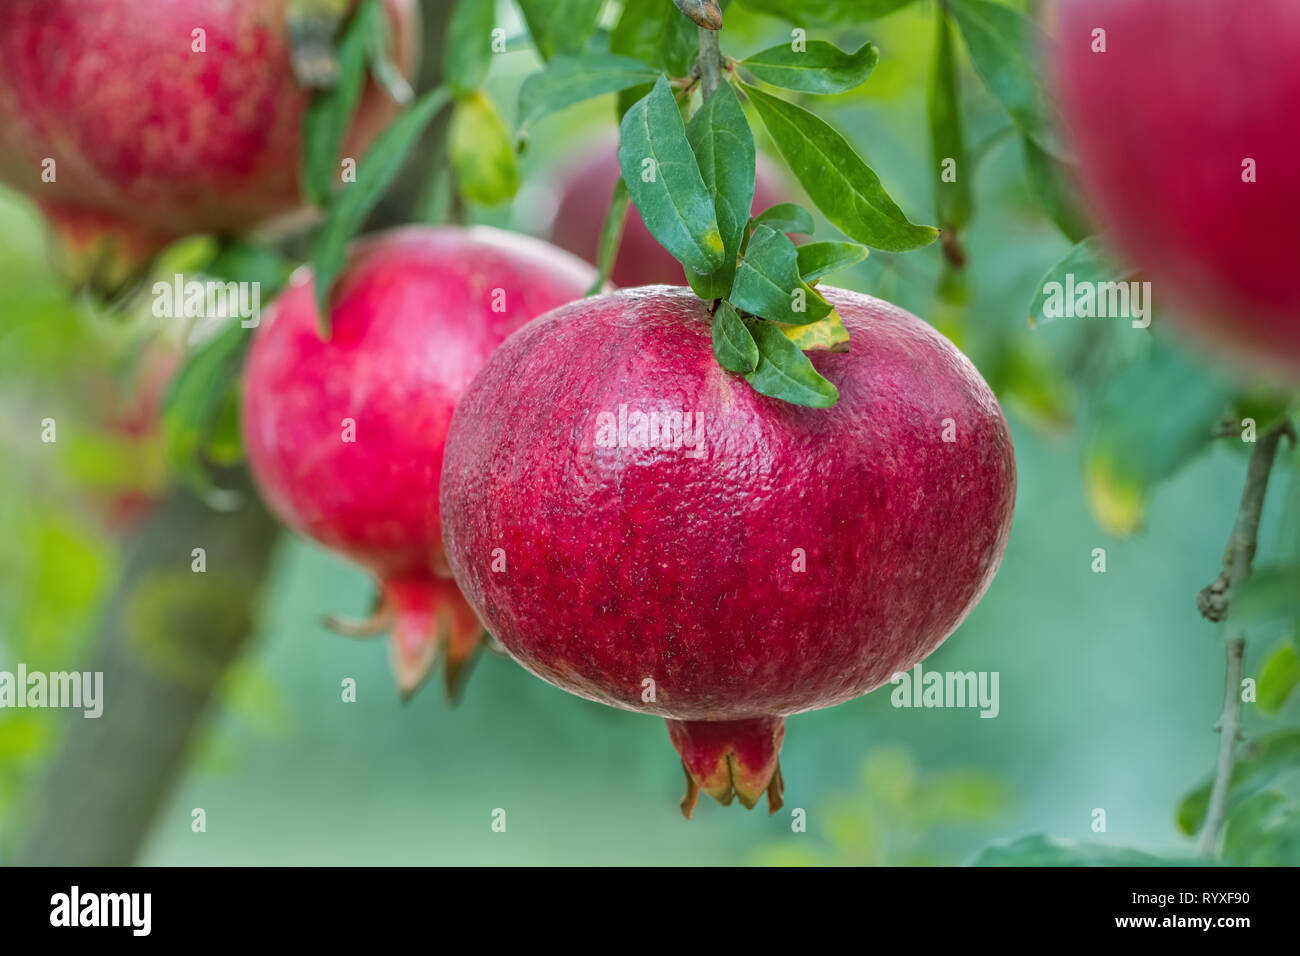 Ripe pomegranate fruits on a tree branch close-up Stock Photo